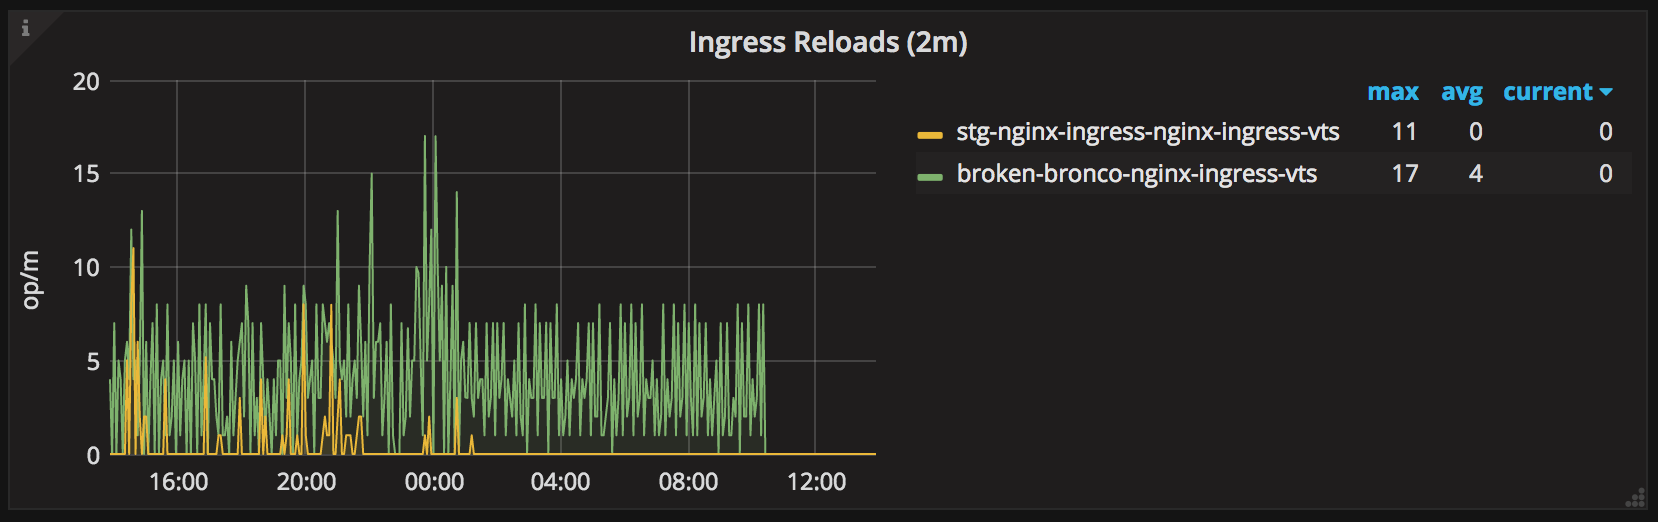 Grafana dashboard showing number of nginx-ingress configuration reloads